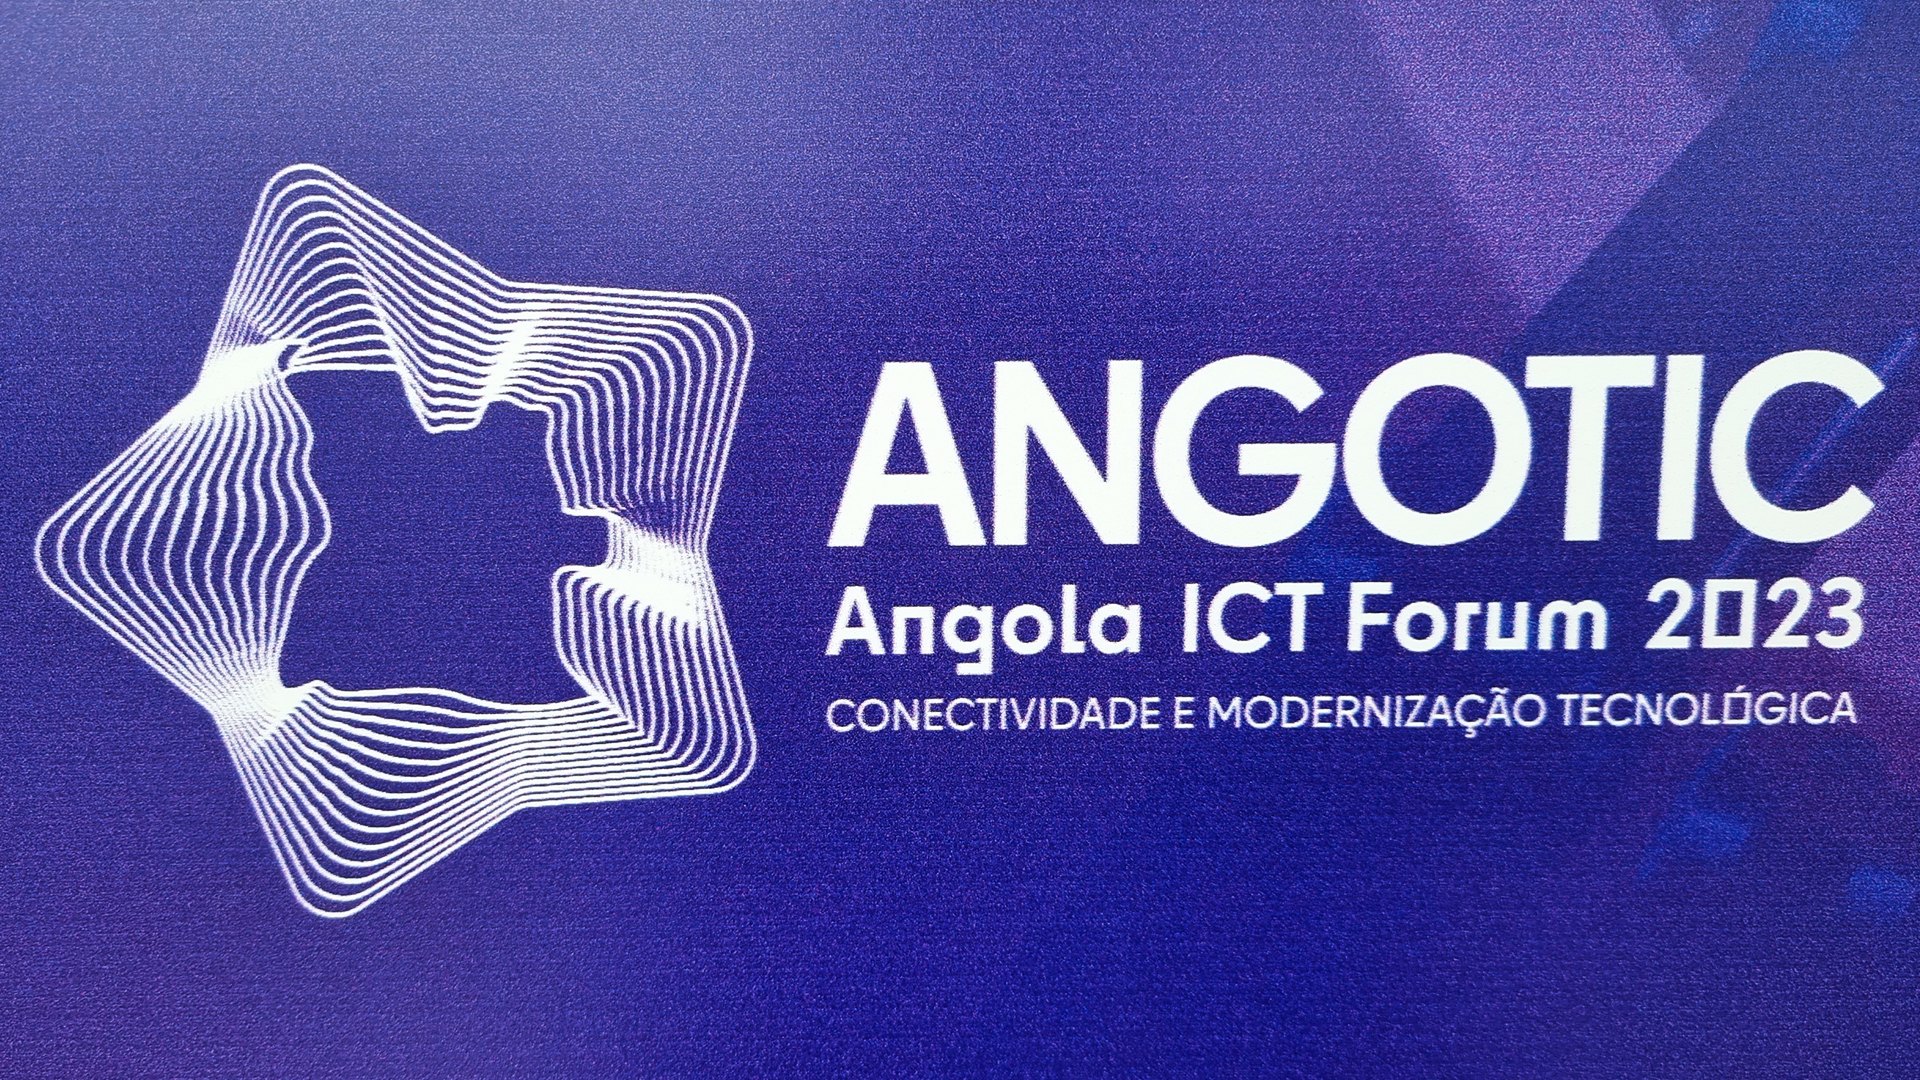 Angotic Angola and Virtual Reality Rentals Pioneering Participation